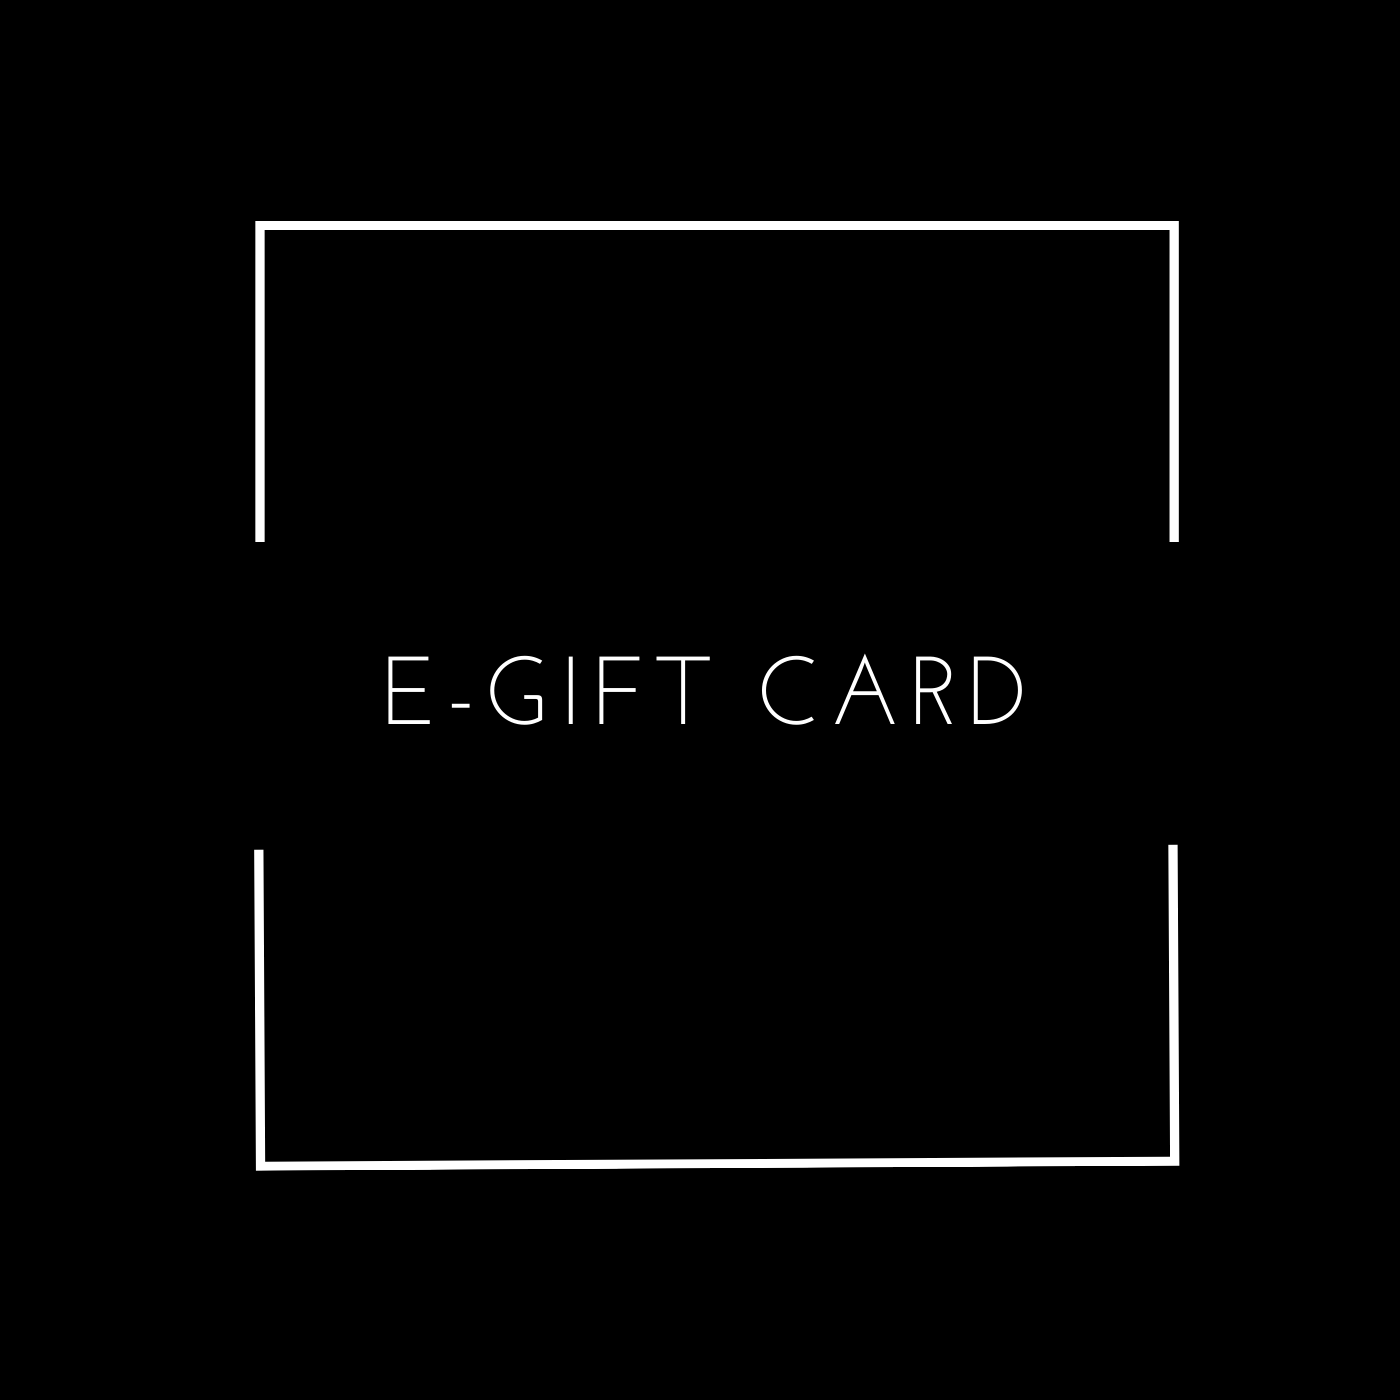 E-GIFT CARD